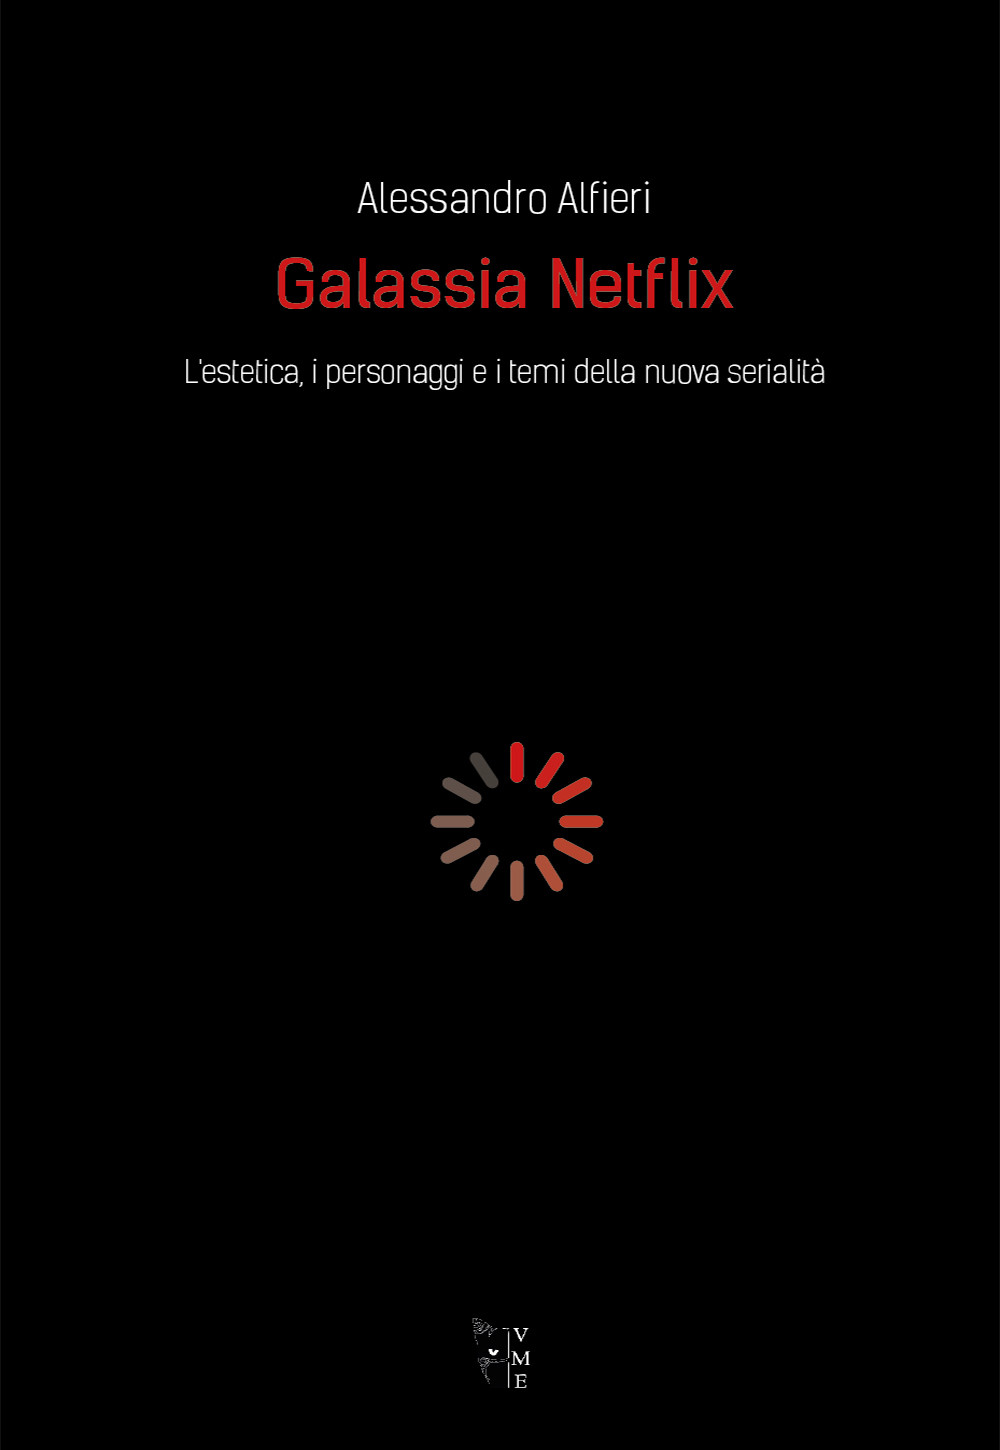 Alessandro Alfieri - Galassia Netflix